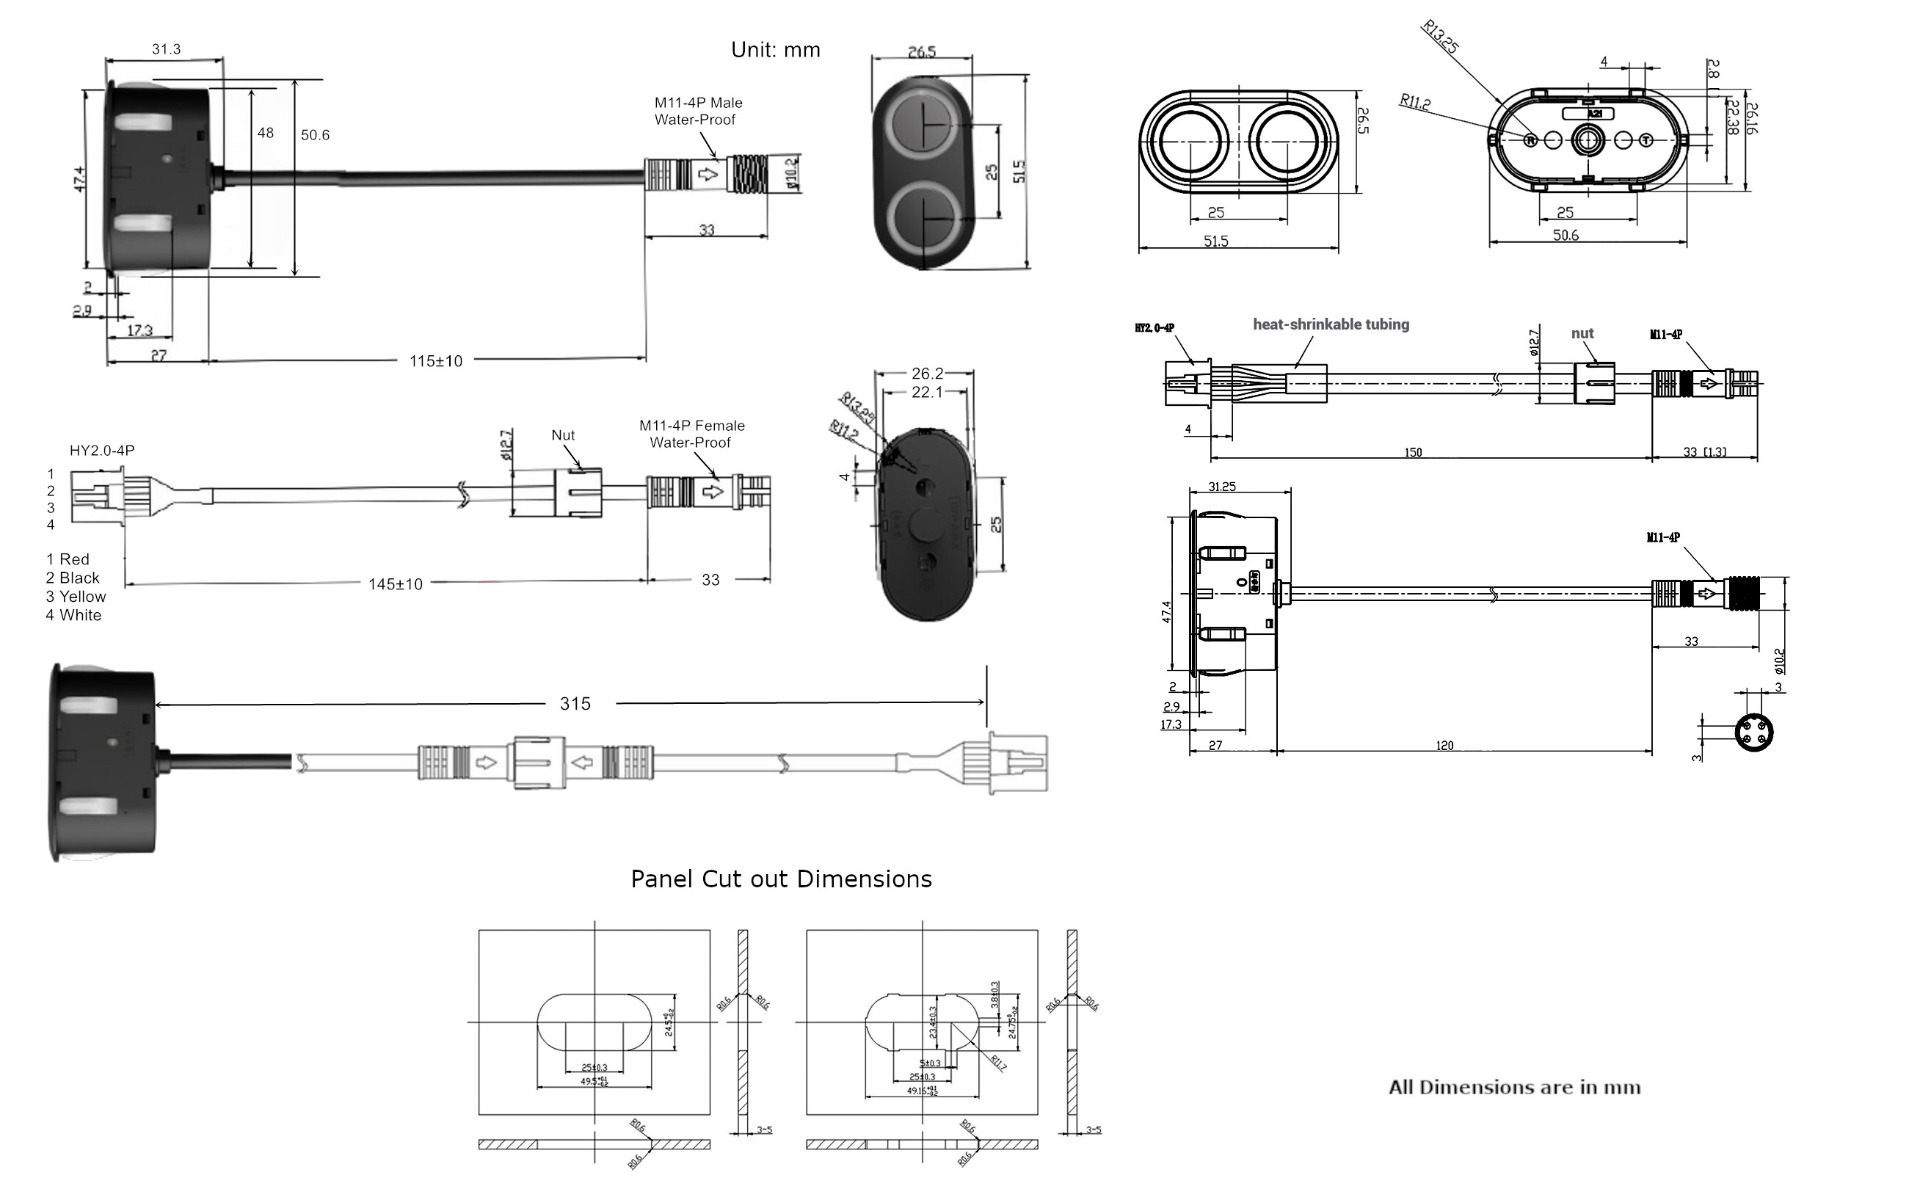 PB-A21 Ultrasonic Obstacle Avoidance Sensor Dimensions